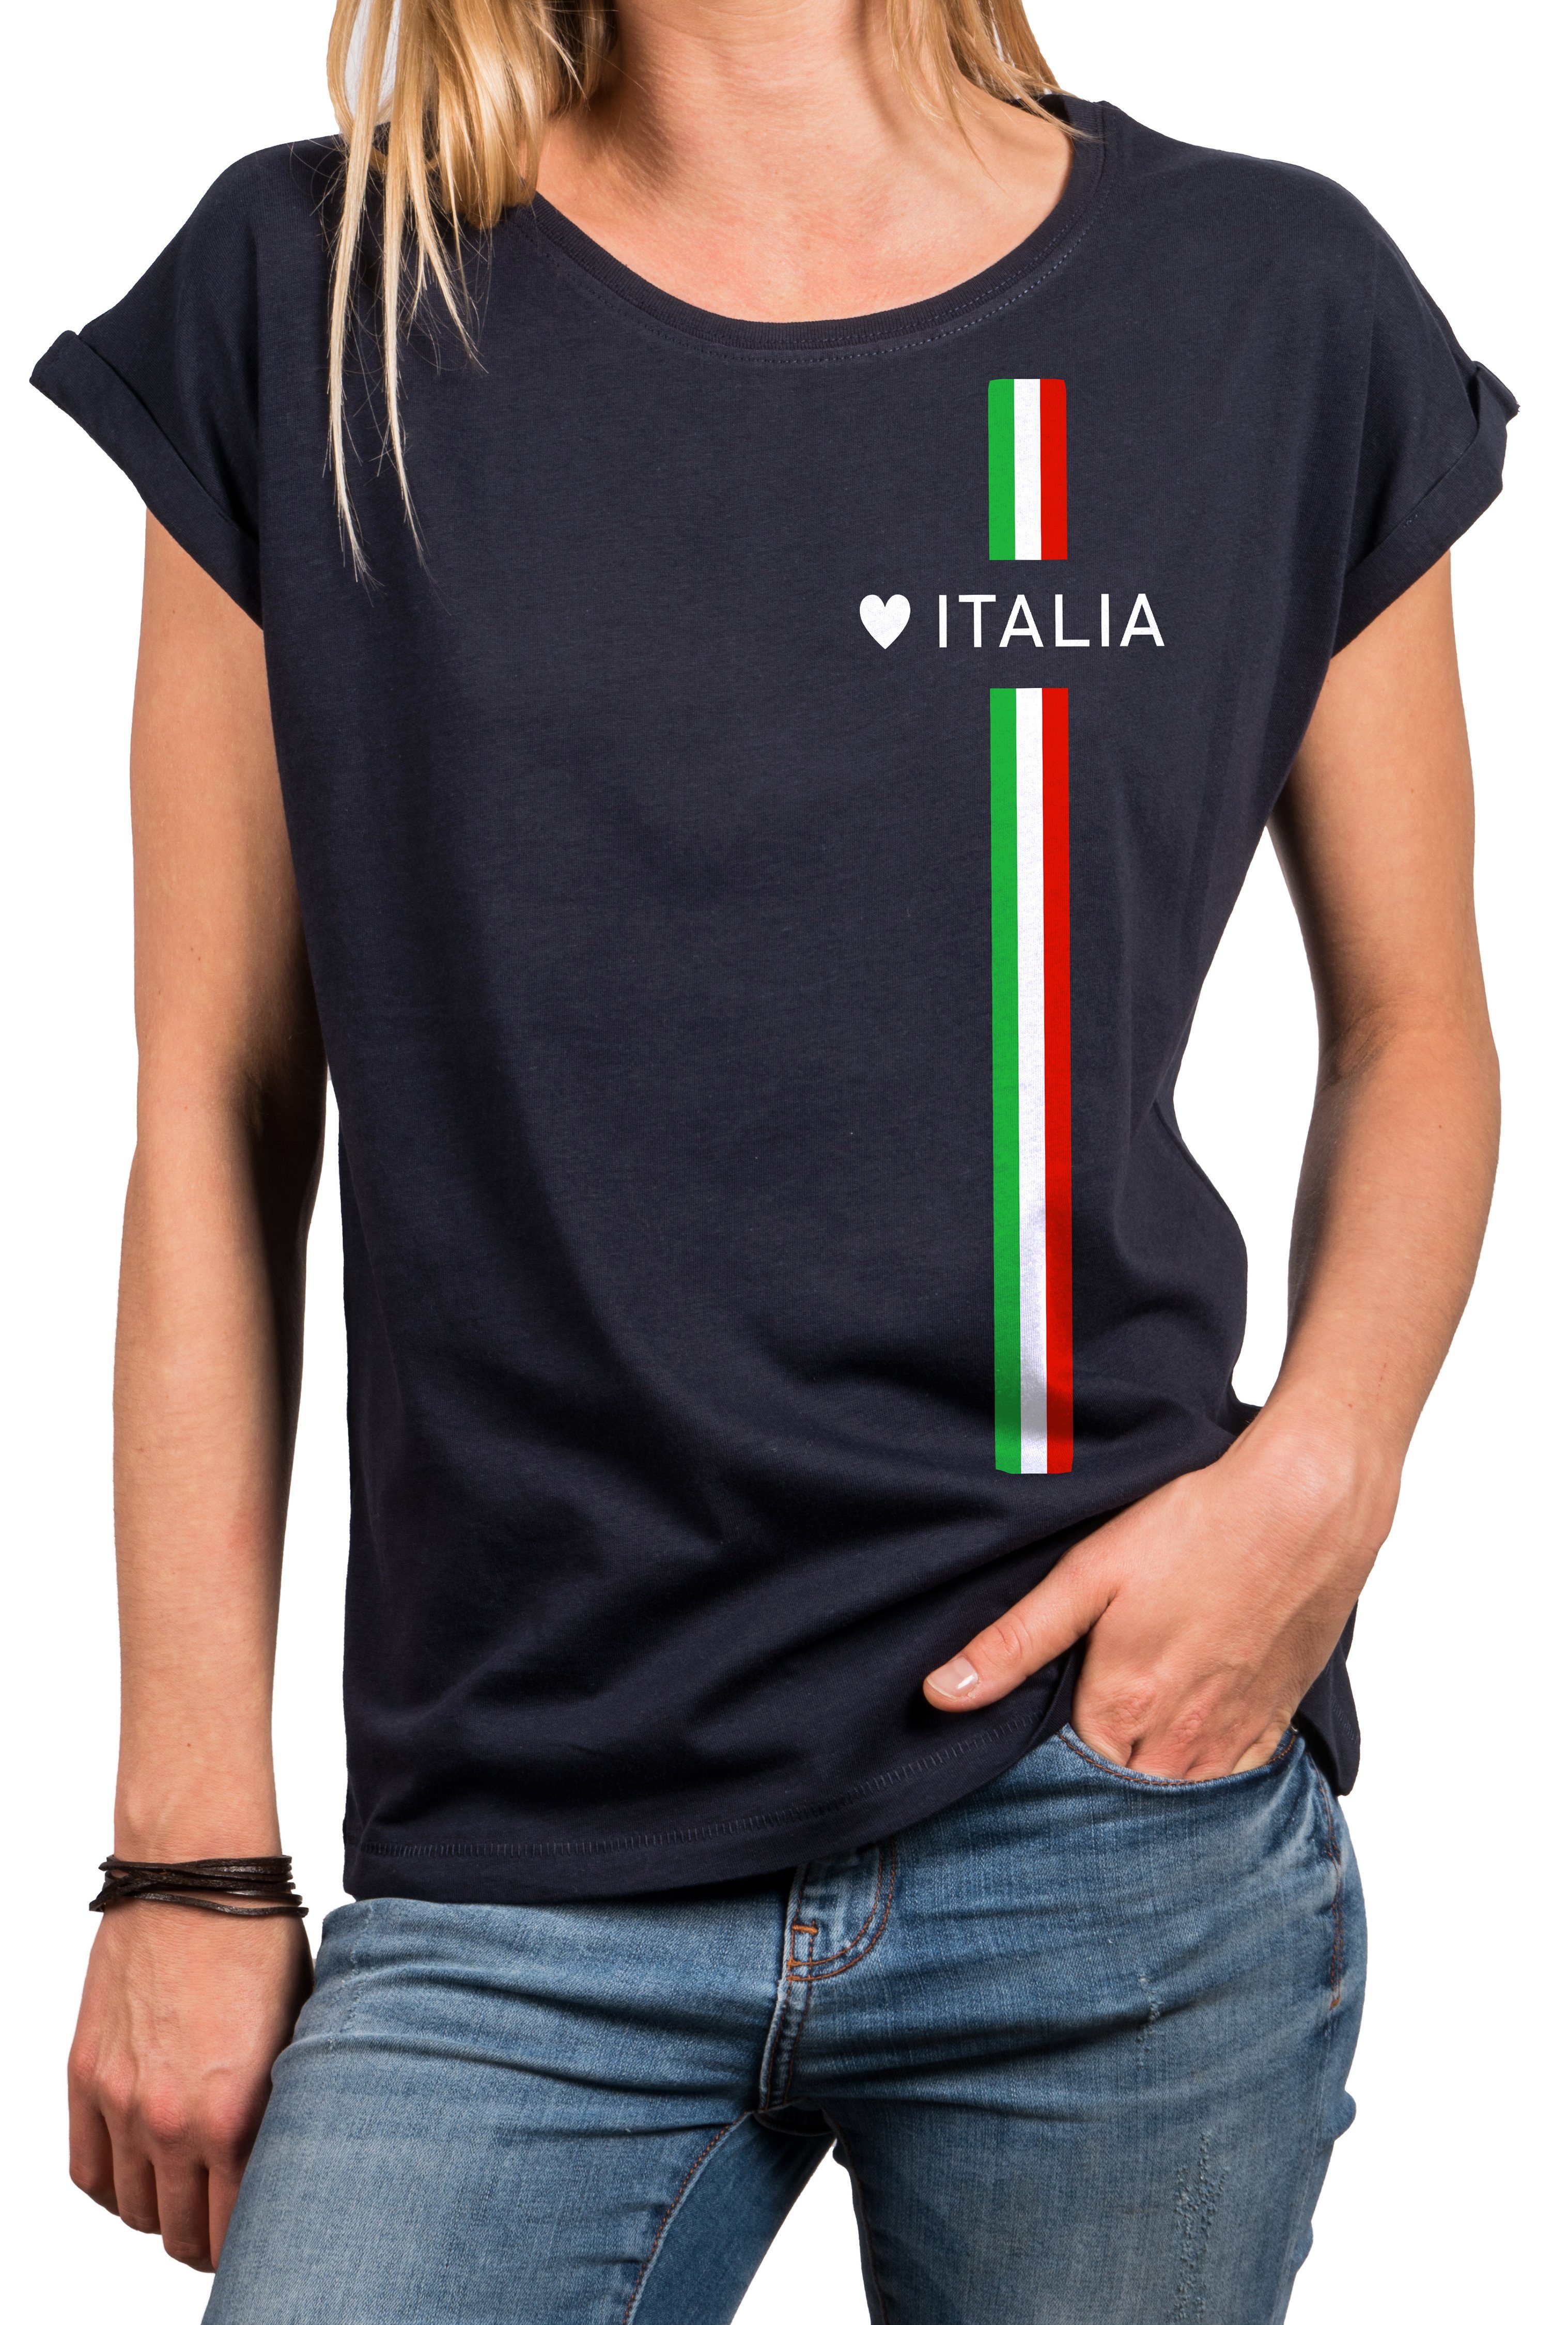 MAKAYA Print-Shirt Damen Italienische Mode Italia Top Italien Trikot Herz Italiano Style Kurzarmshirt, mit Druck Blau